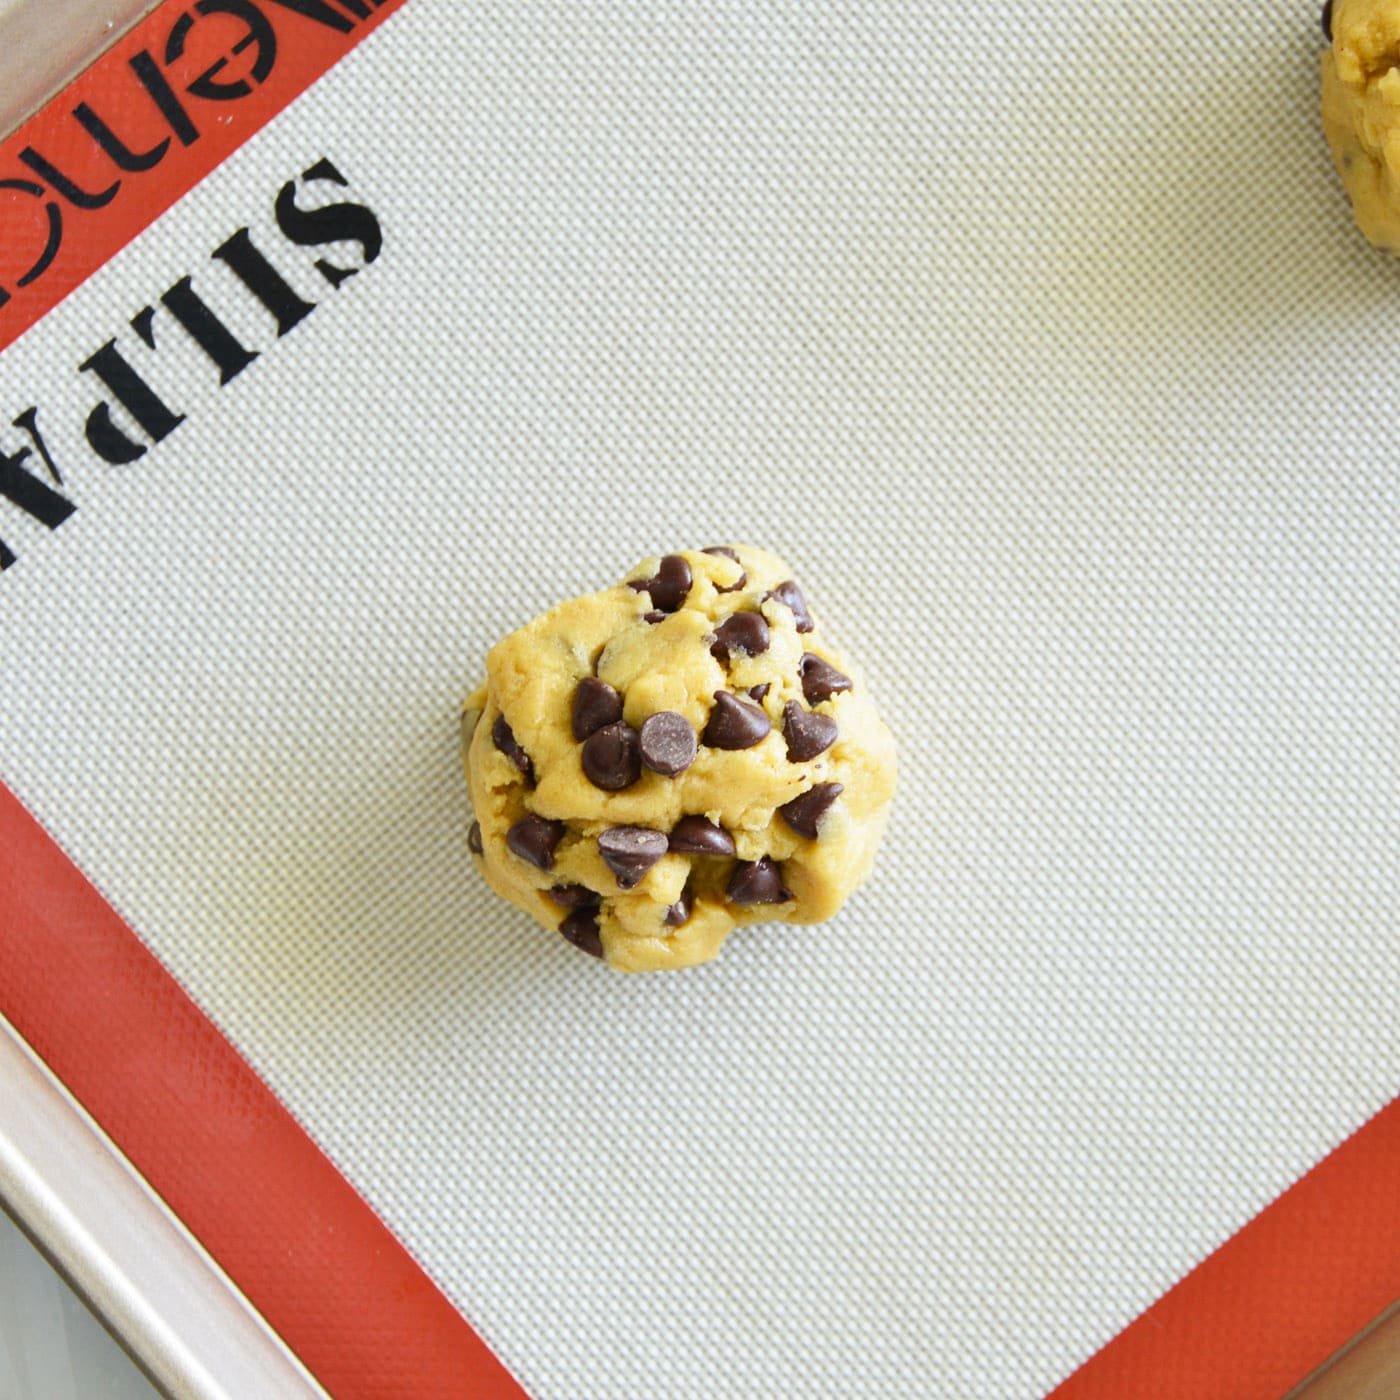 chocolate chip cookie dough ball on baking sheet